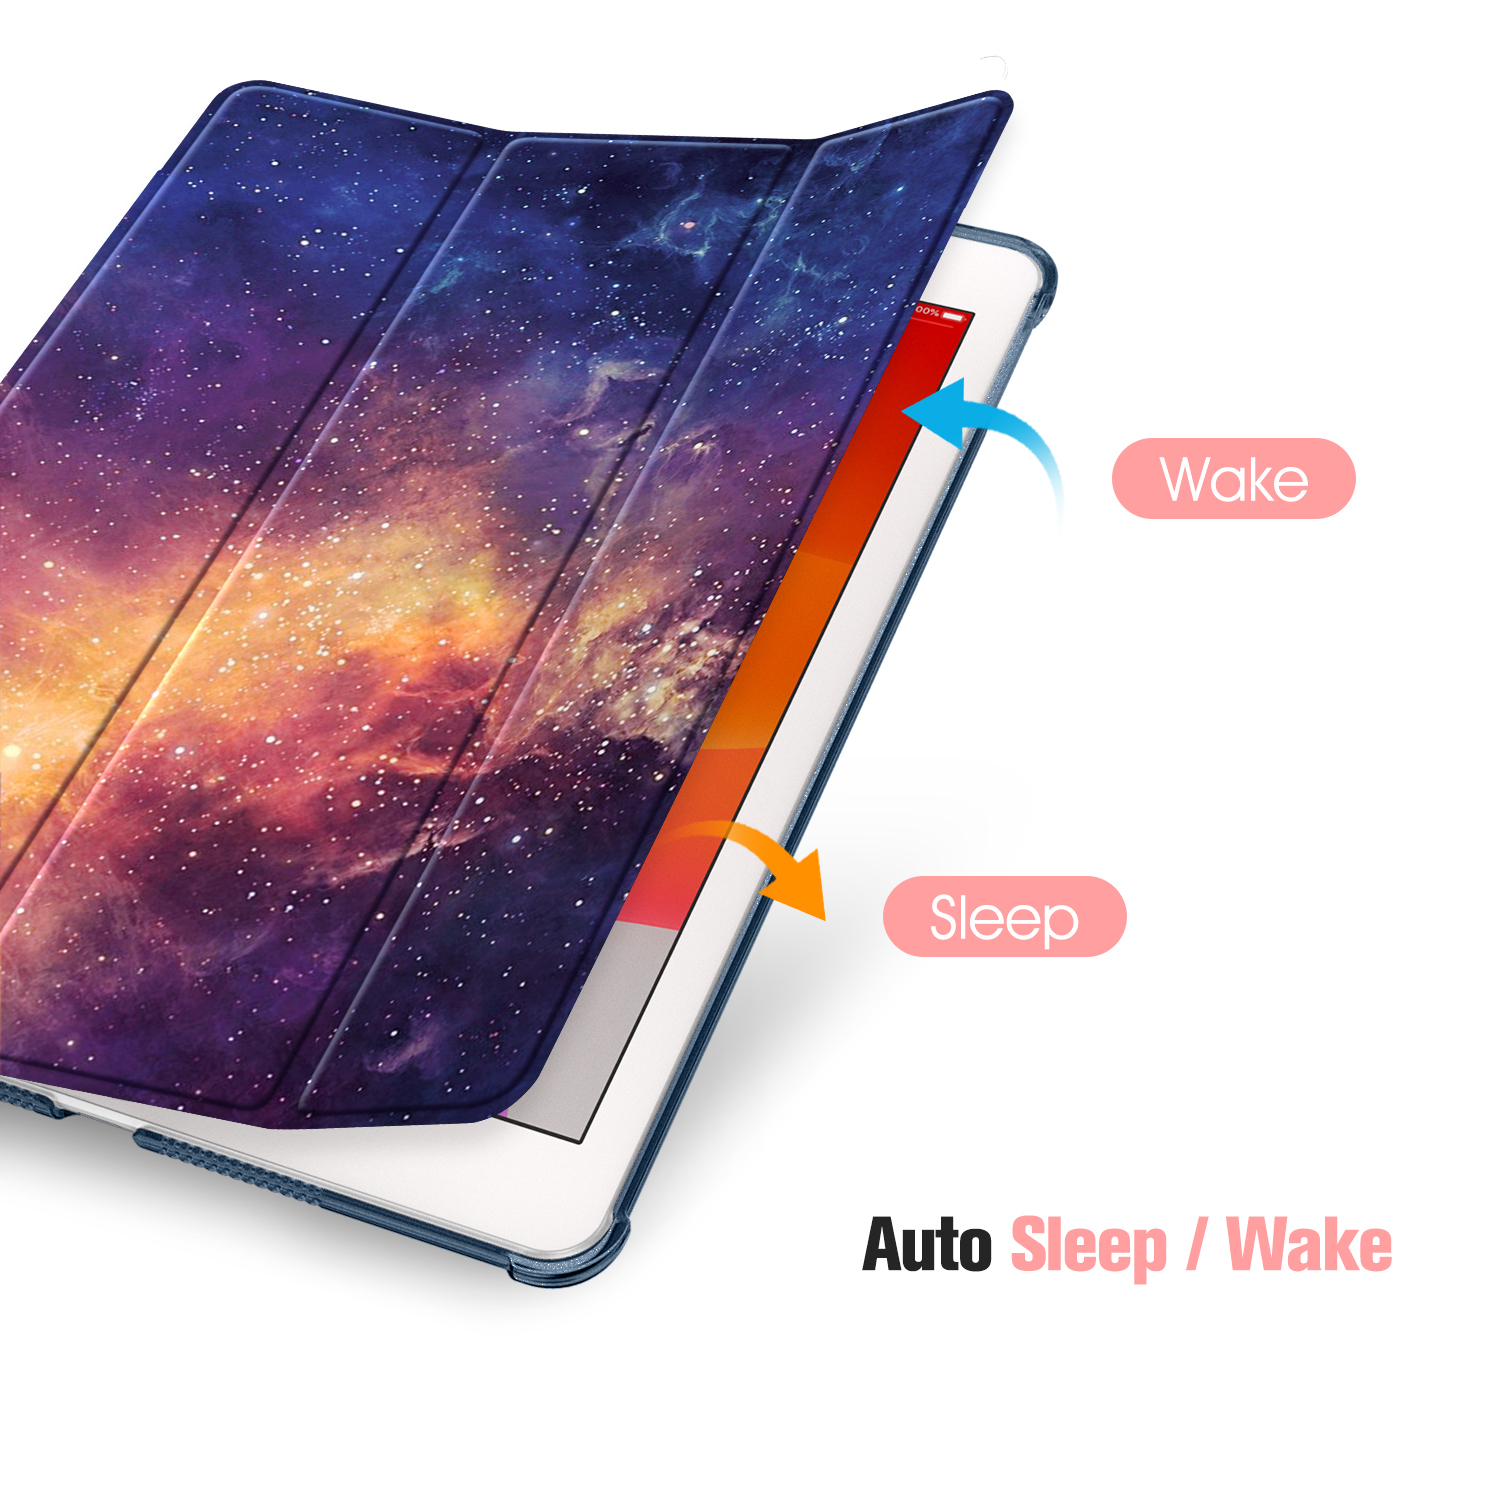 Galaxie Generation iPad Die - 2021/2020/2019), FINTIE iPad, 10.2 Zoll Hülle, Bookcover, (9/8/7